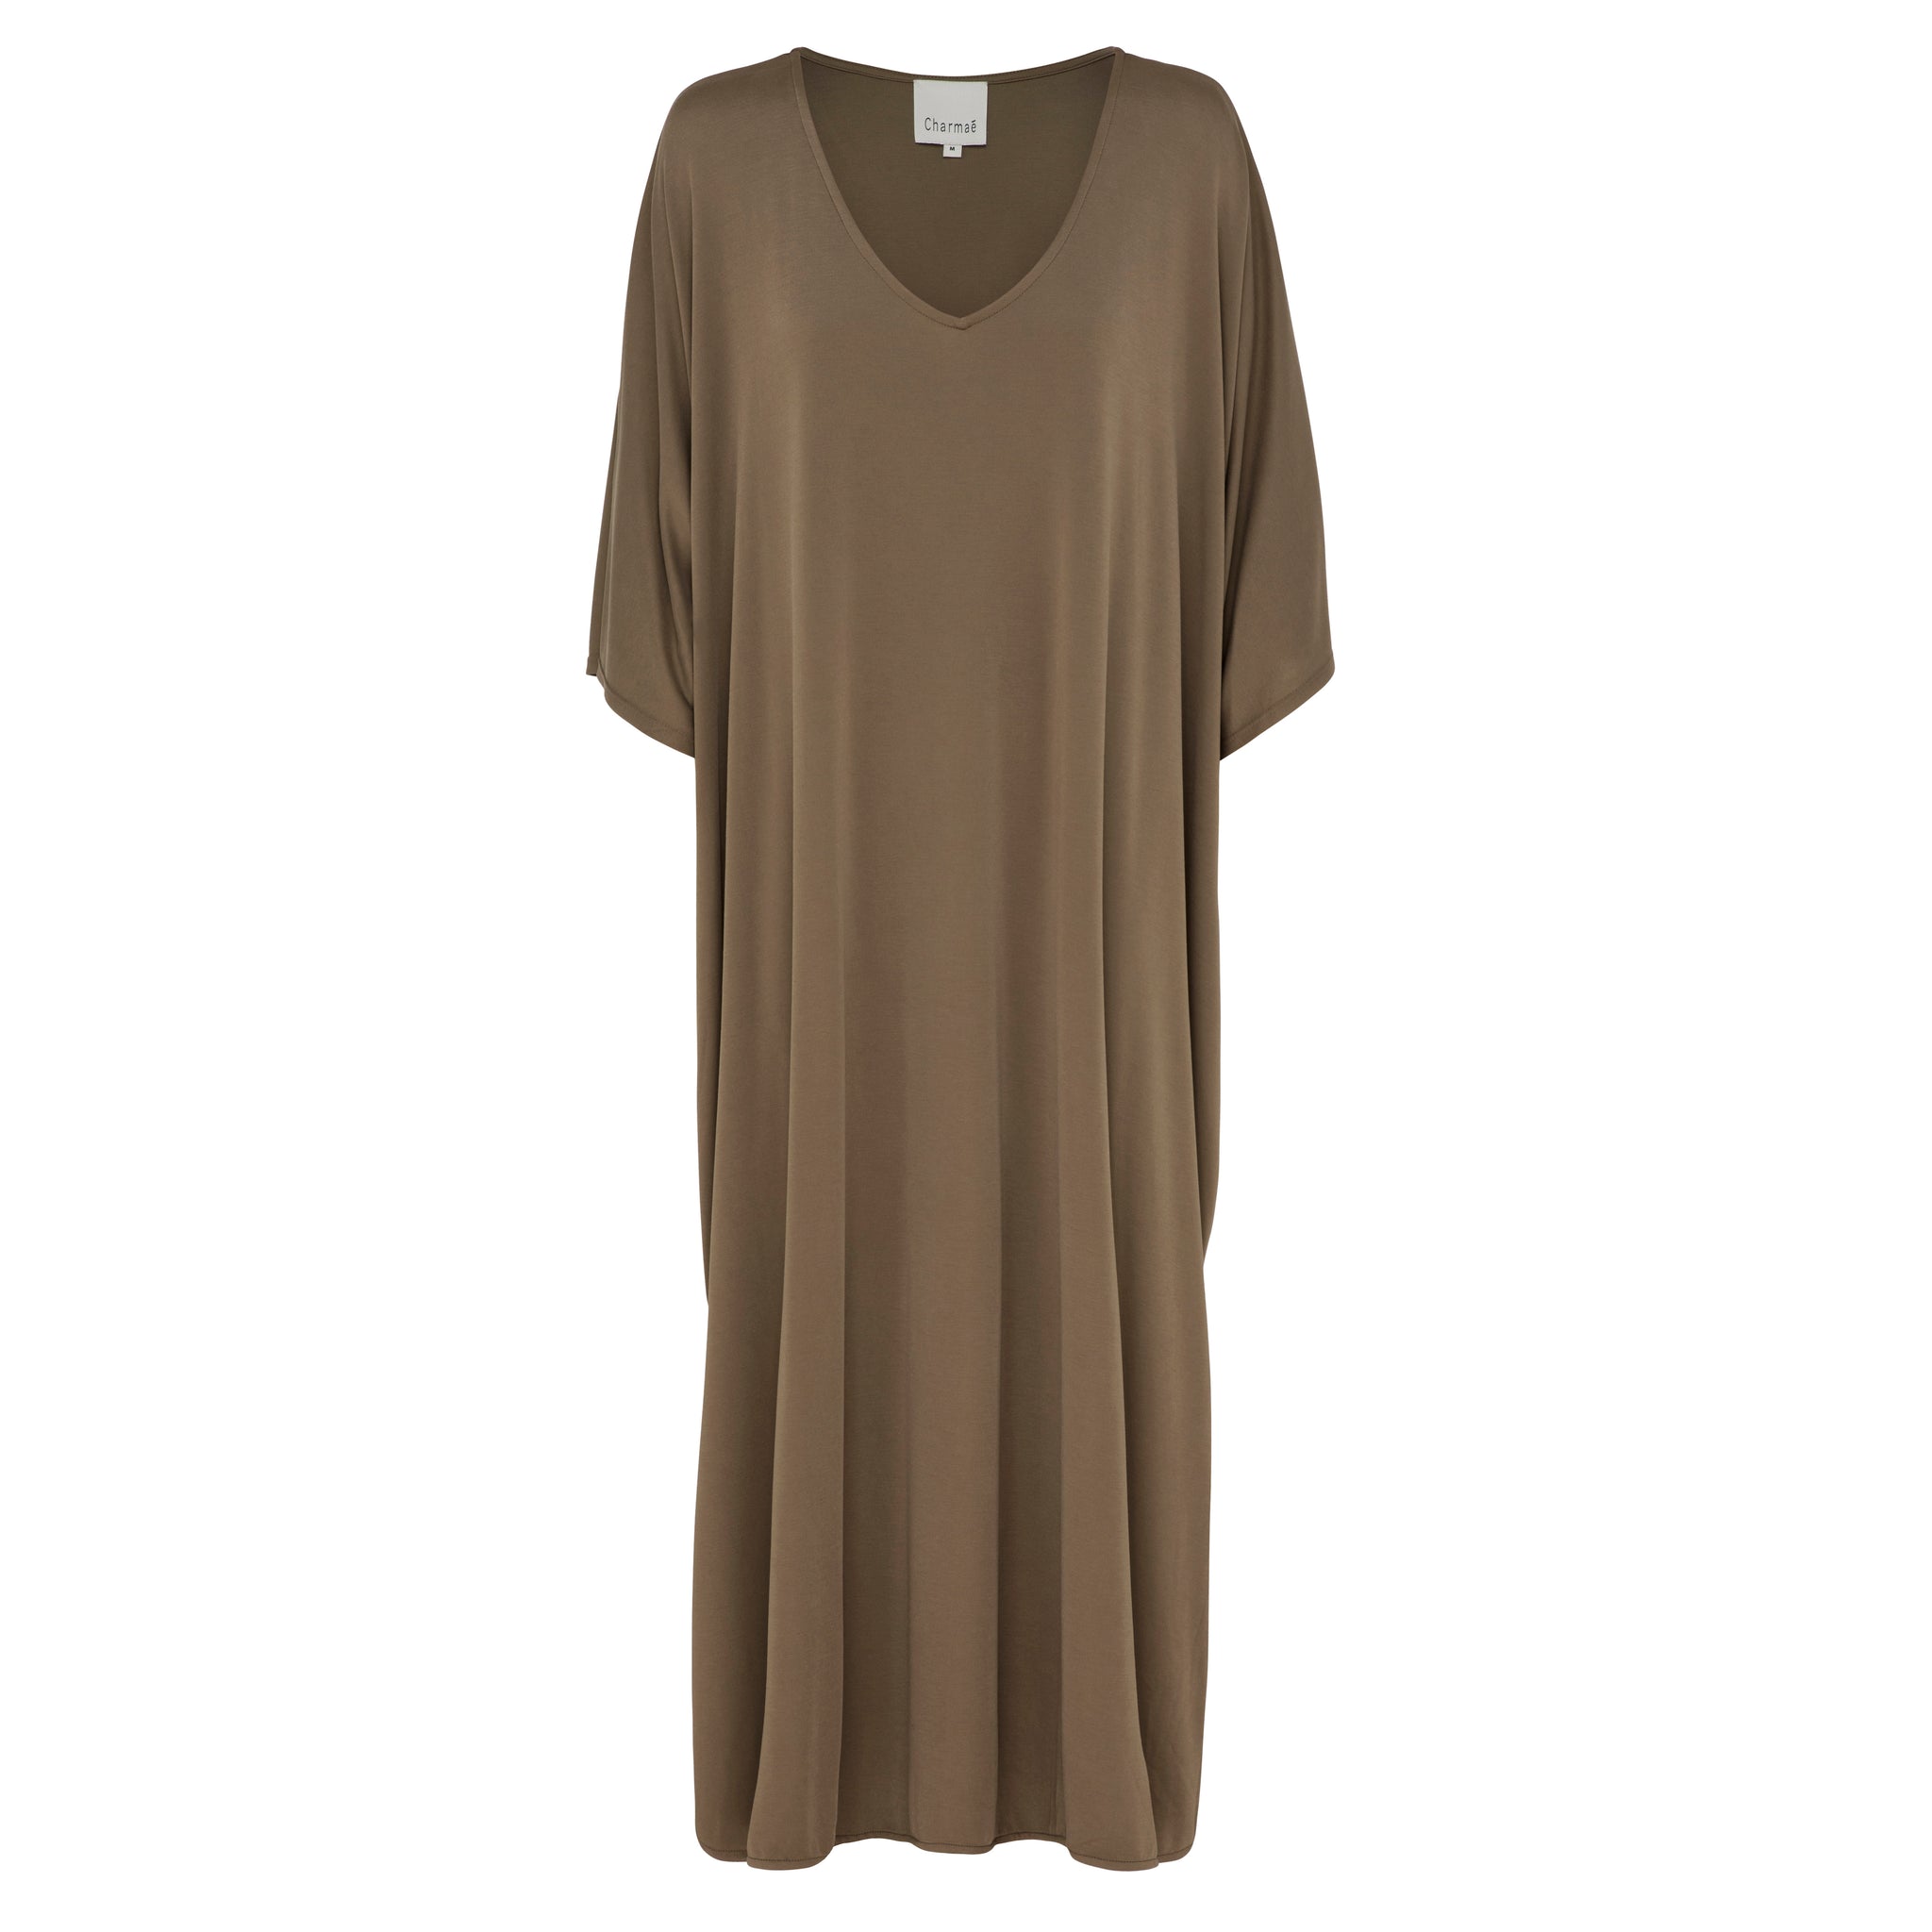 Thalia Dress - Sand Washed Modal Jersey